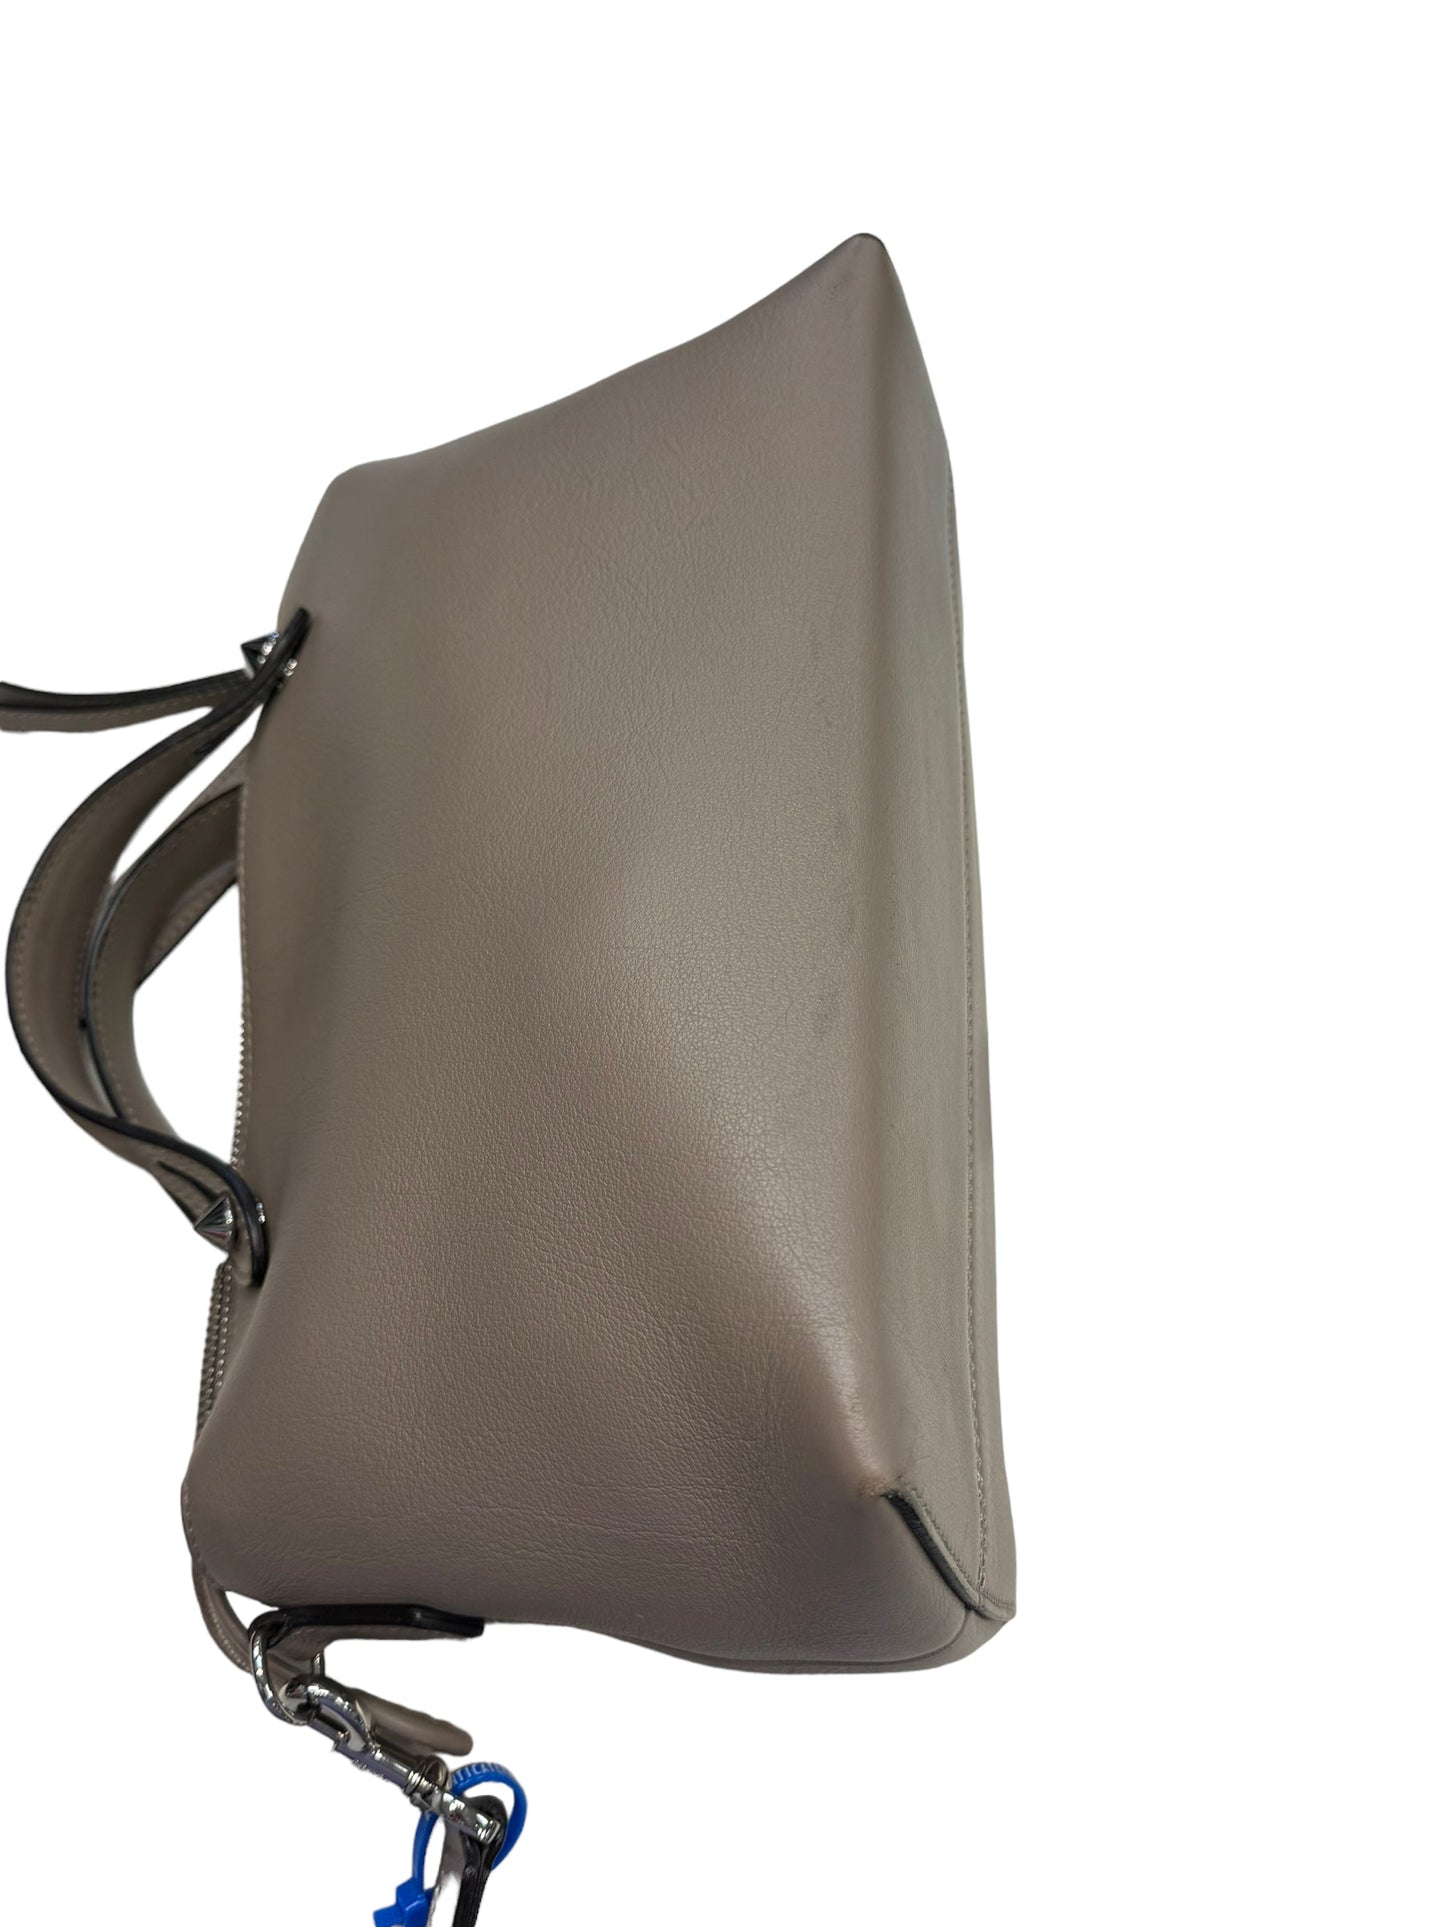 Handbag Luxury Designer By Fendi  Size: Medium